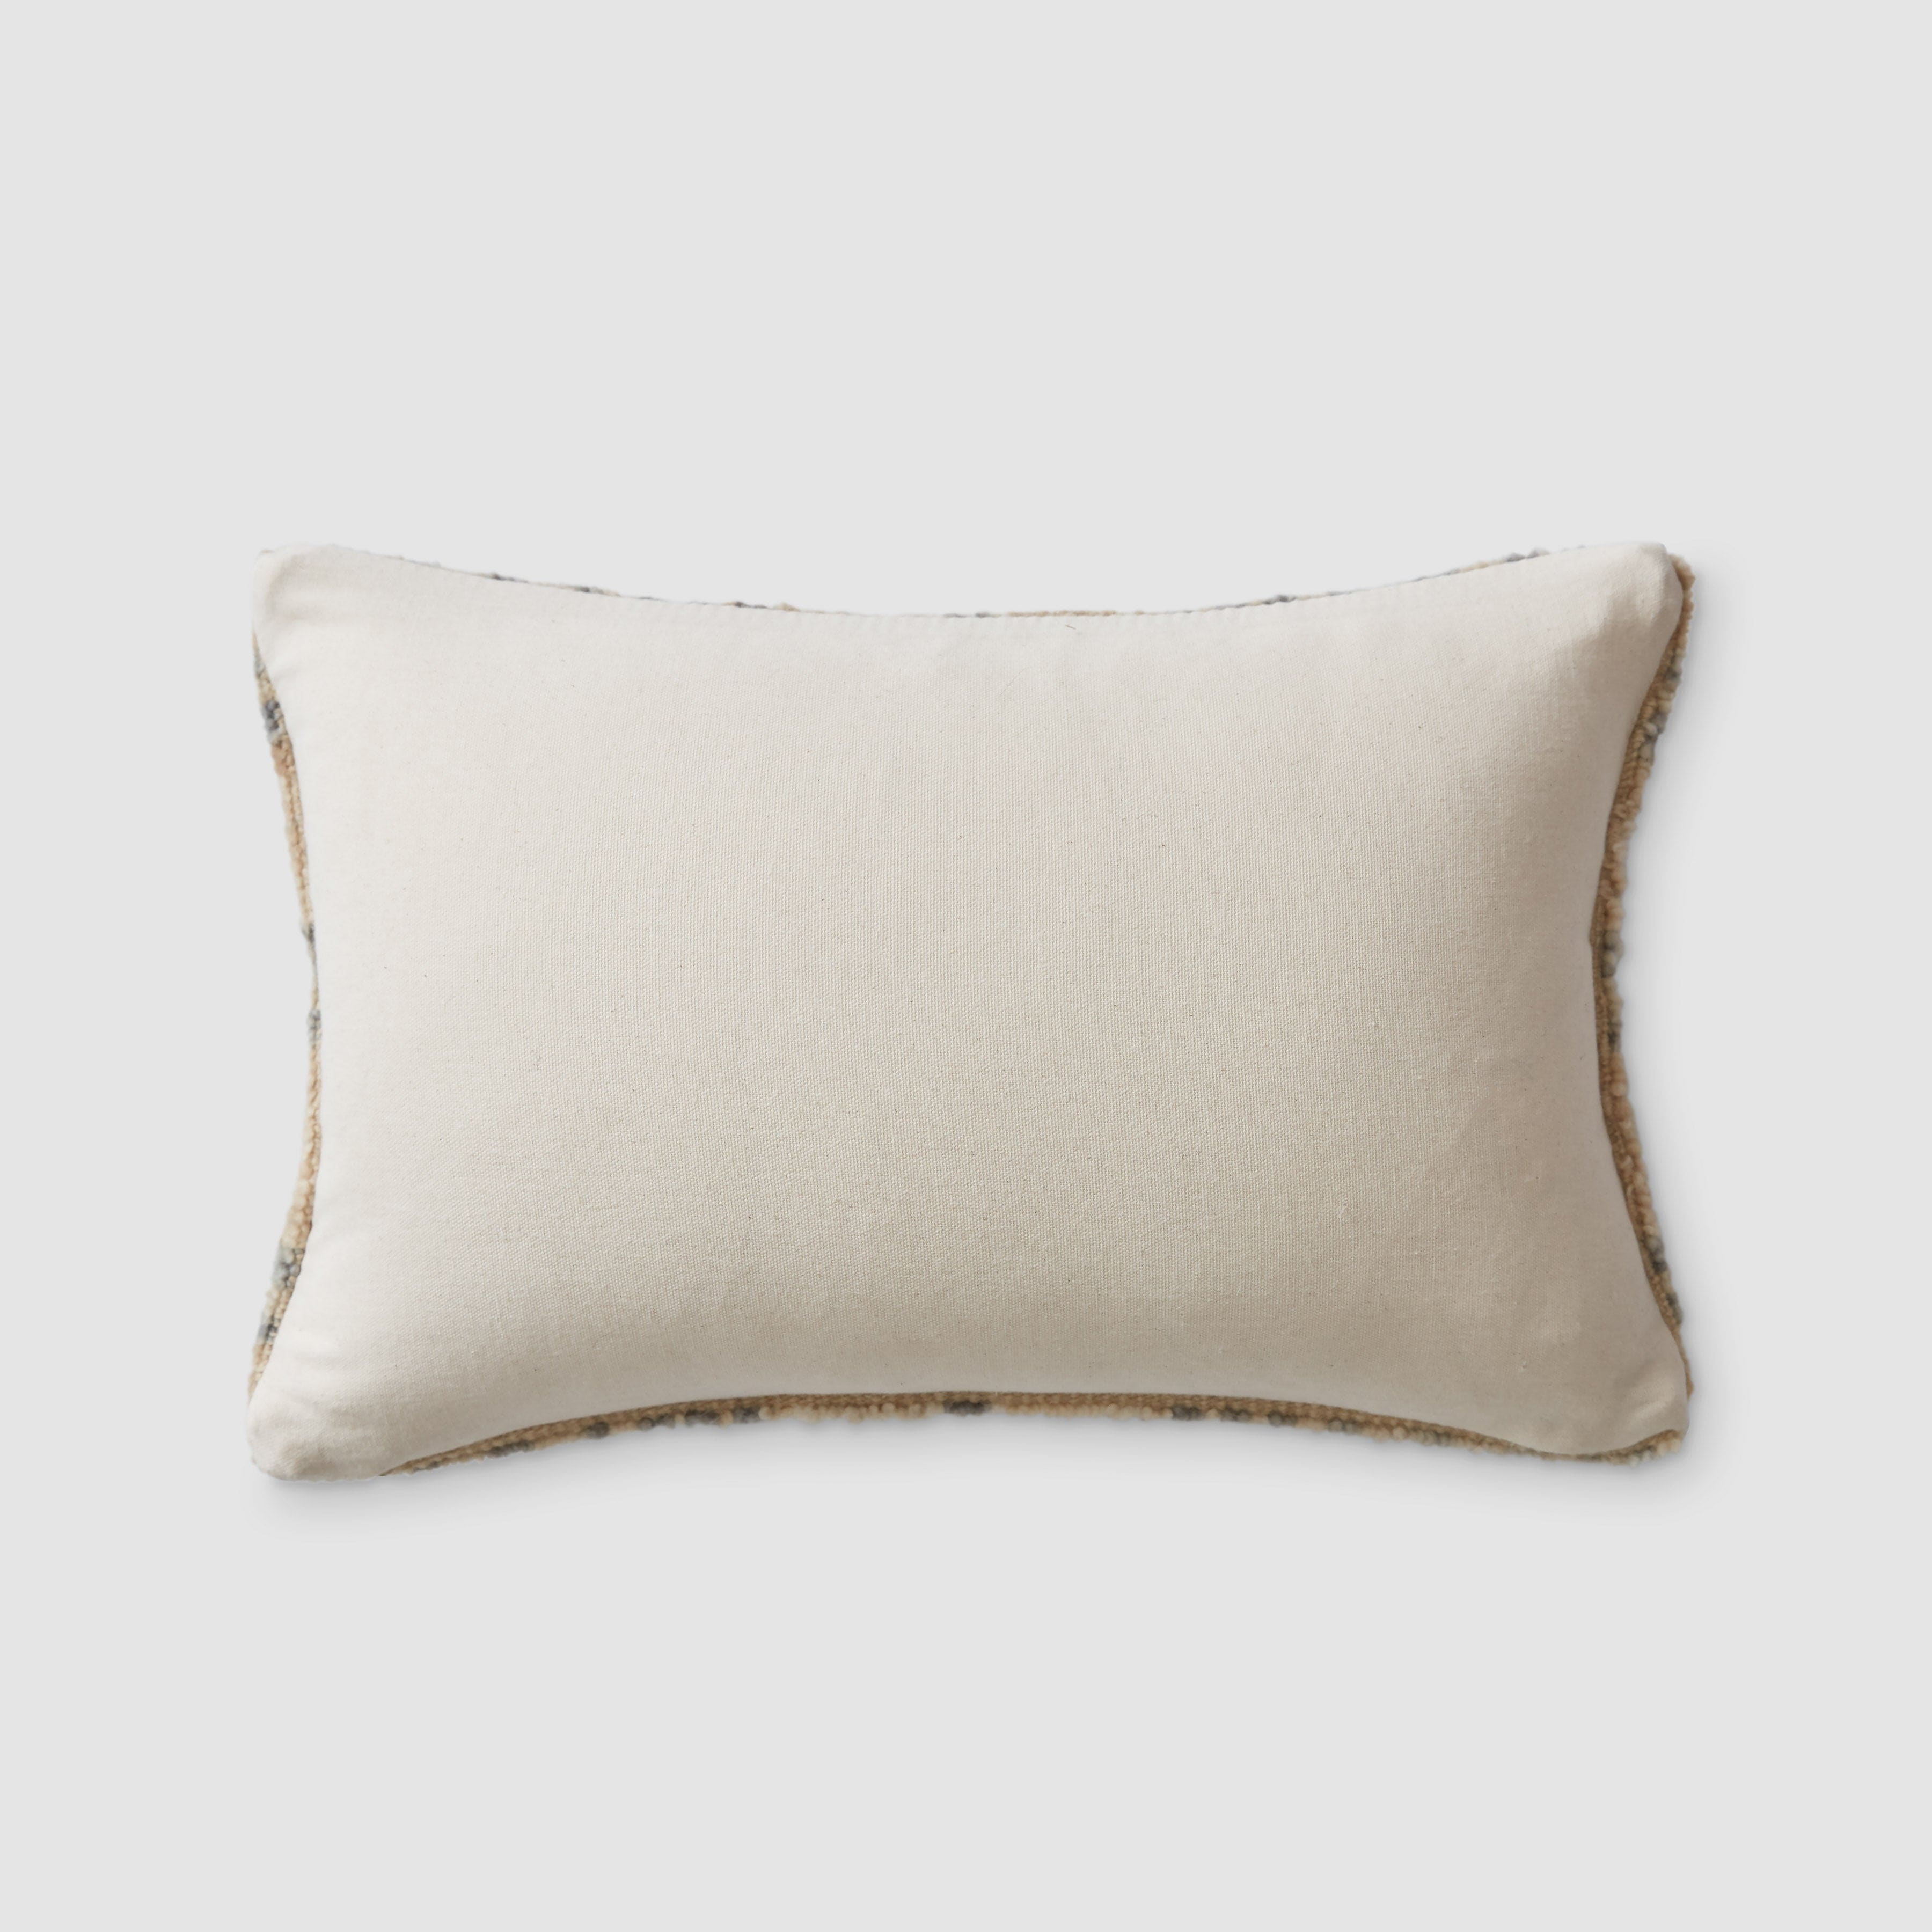 The Citizenry Krisha Hand-Knotted Lumbar Pillow | 12" x 20" | Light Blue - Image 5